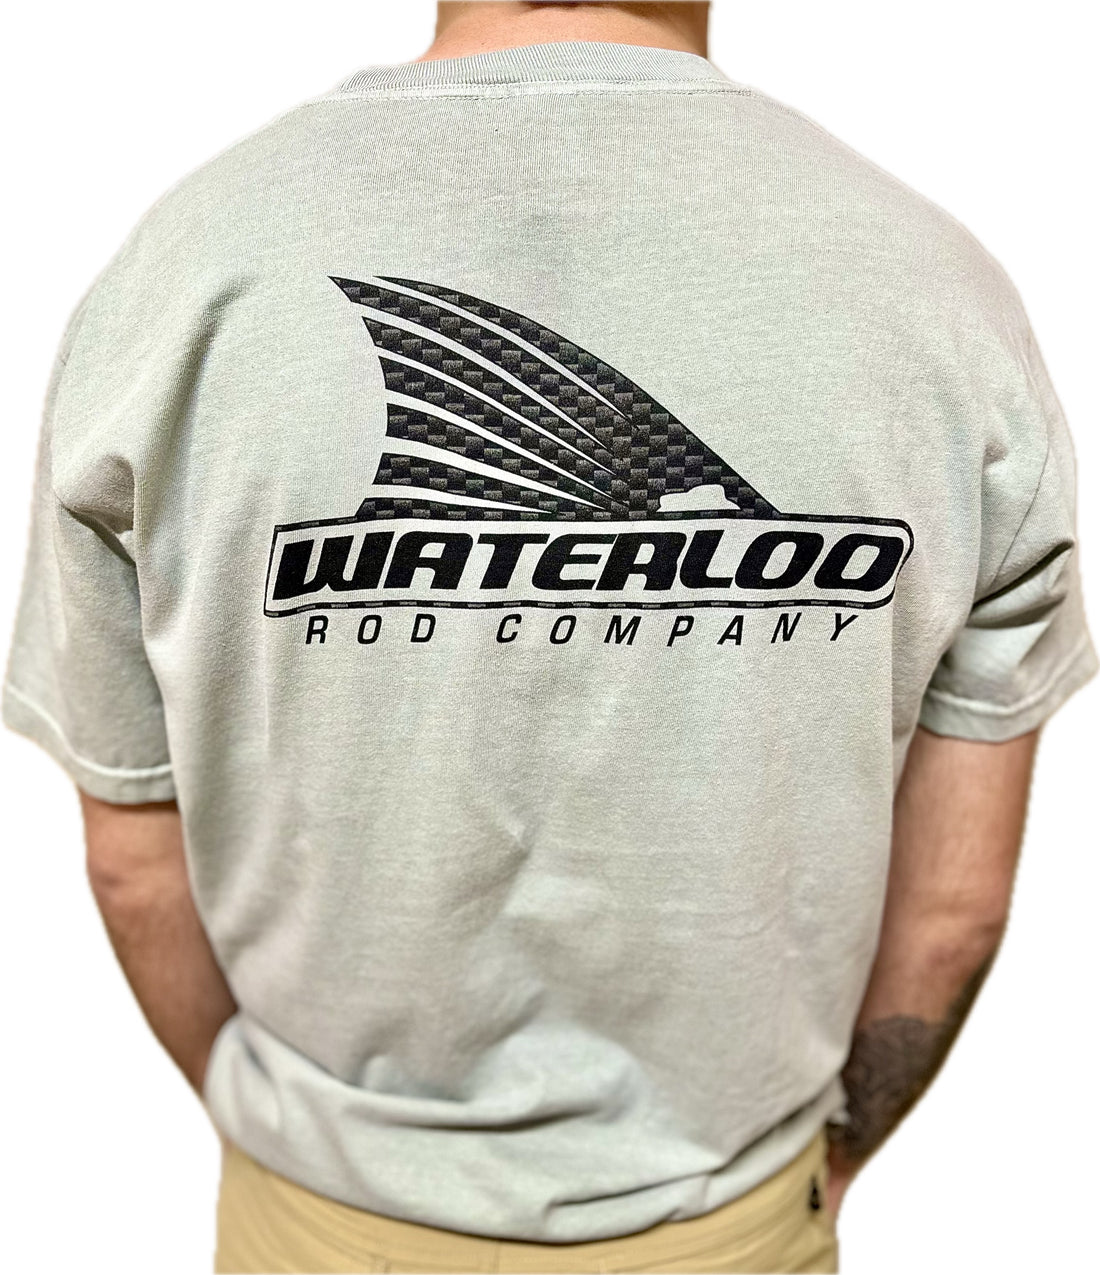 Waterloo Short Sleeve Cotton T-Shirt - Bay - Carbon Fiber Tails Up Logo